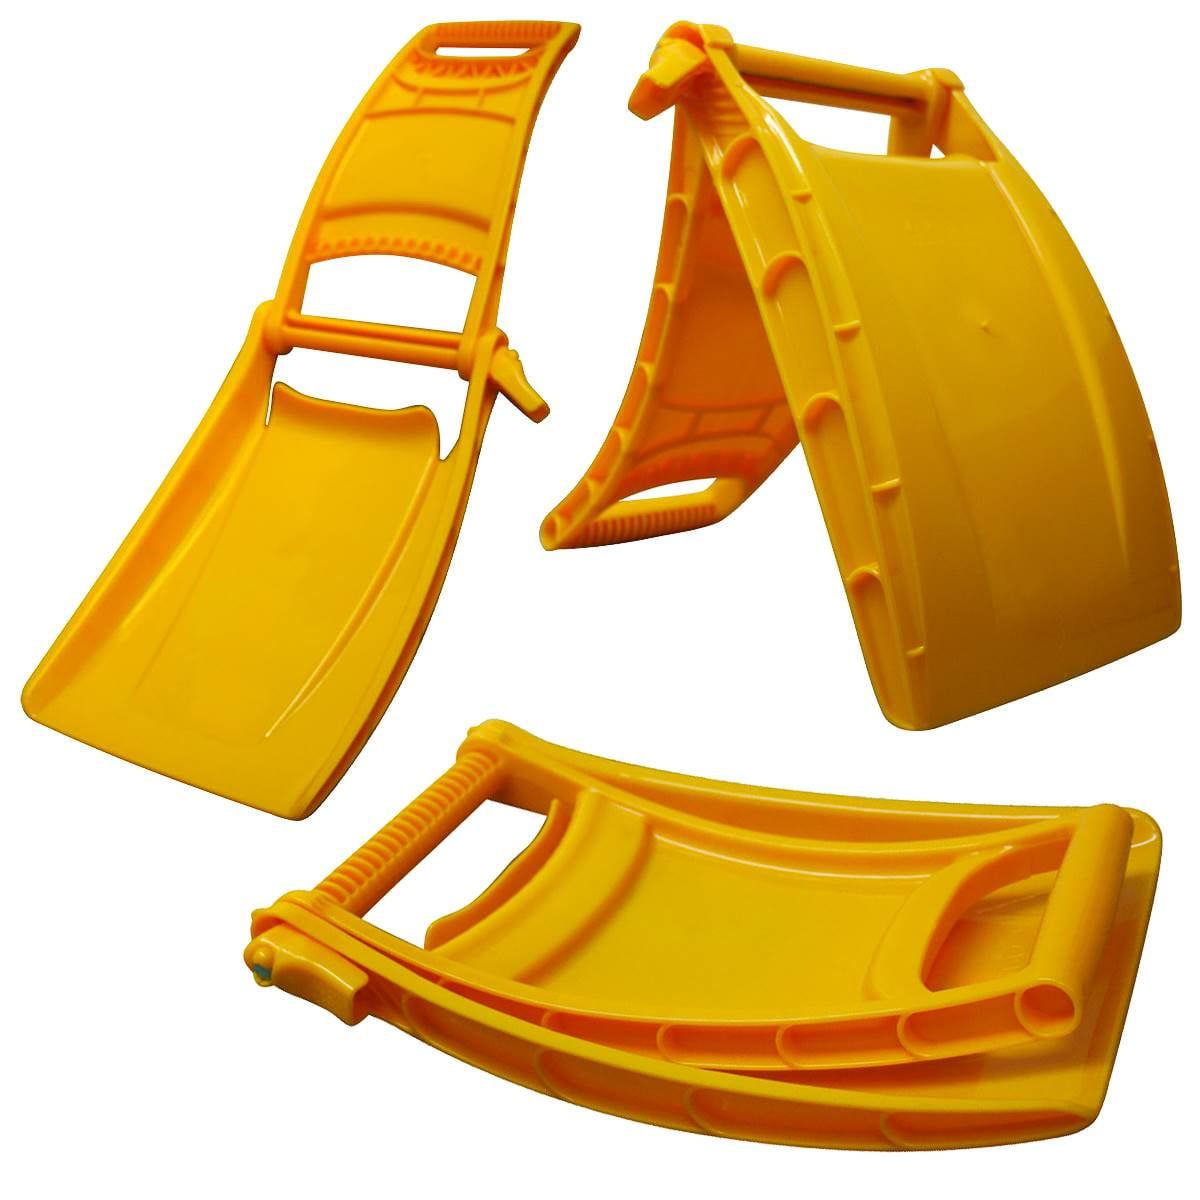 Garant Aprs106 Snowflex Compact Snow Shovel Yellow 